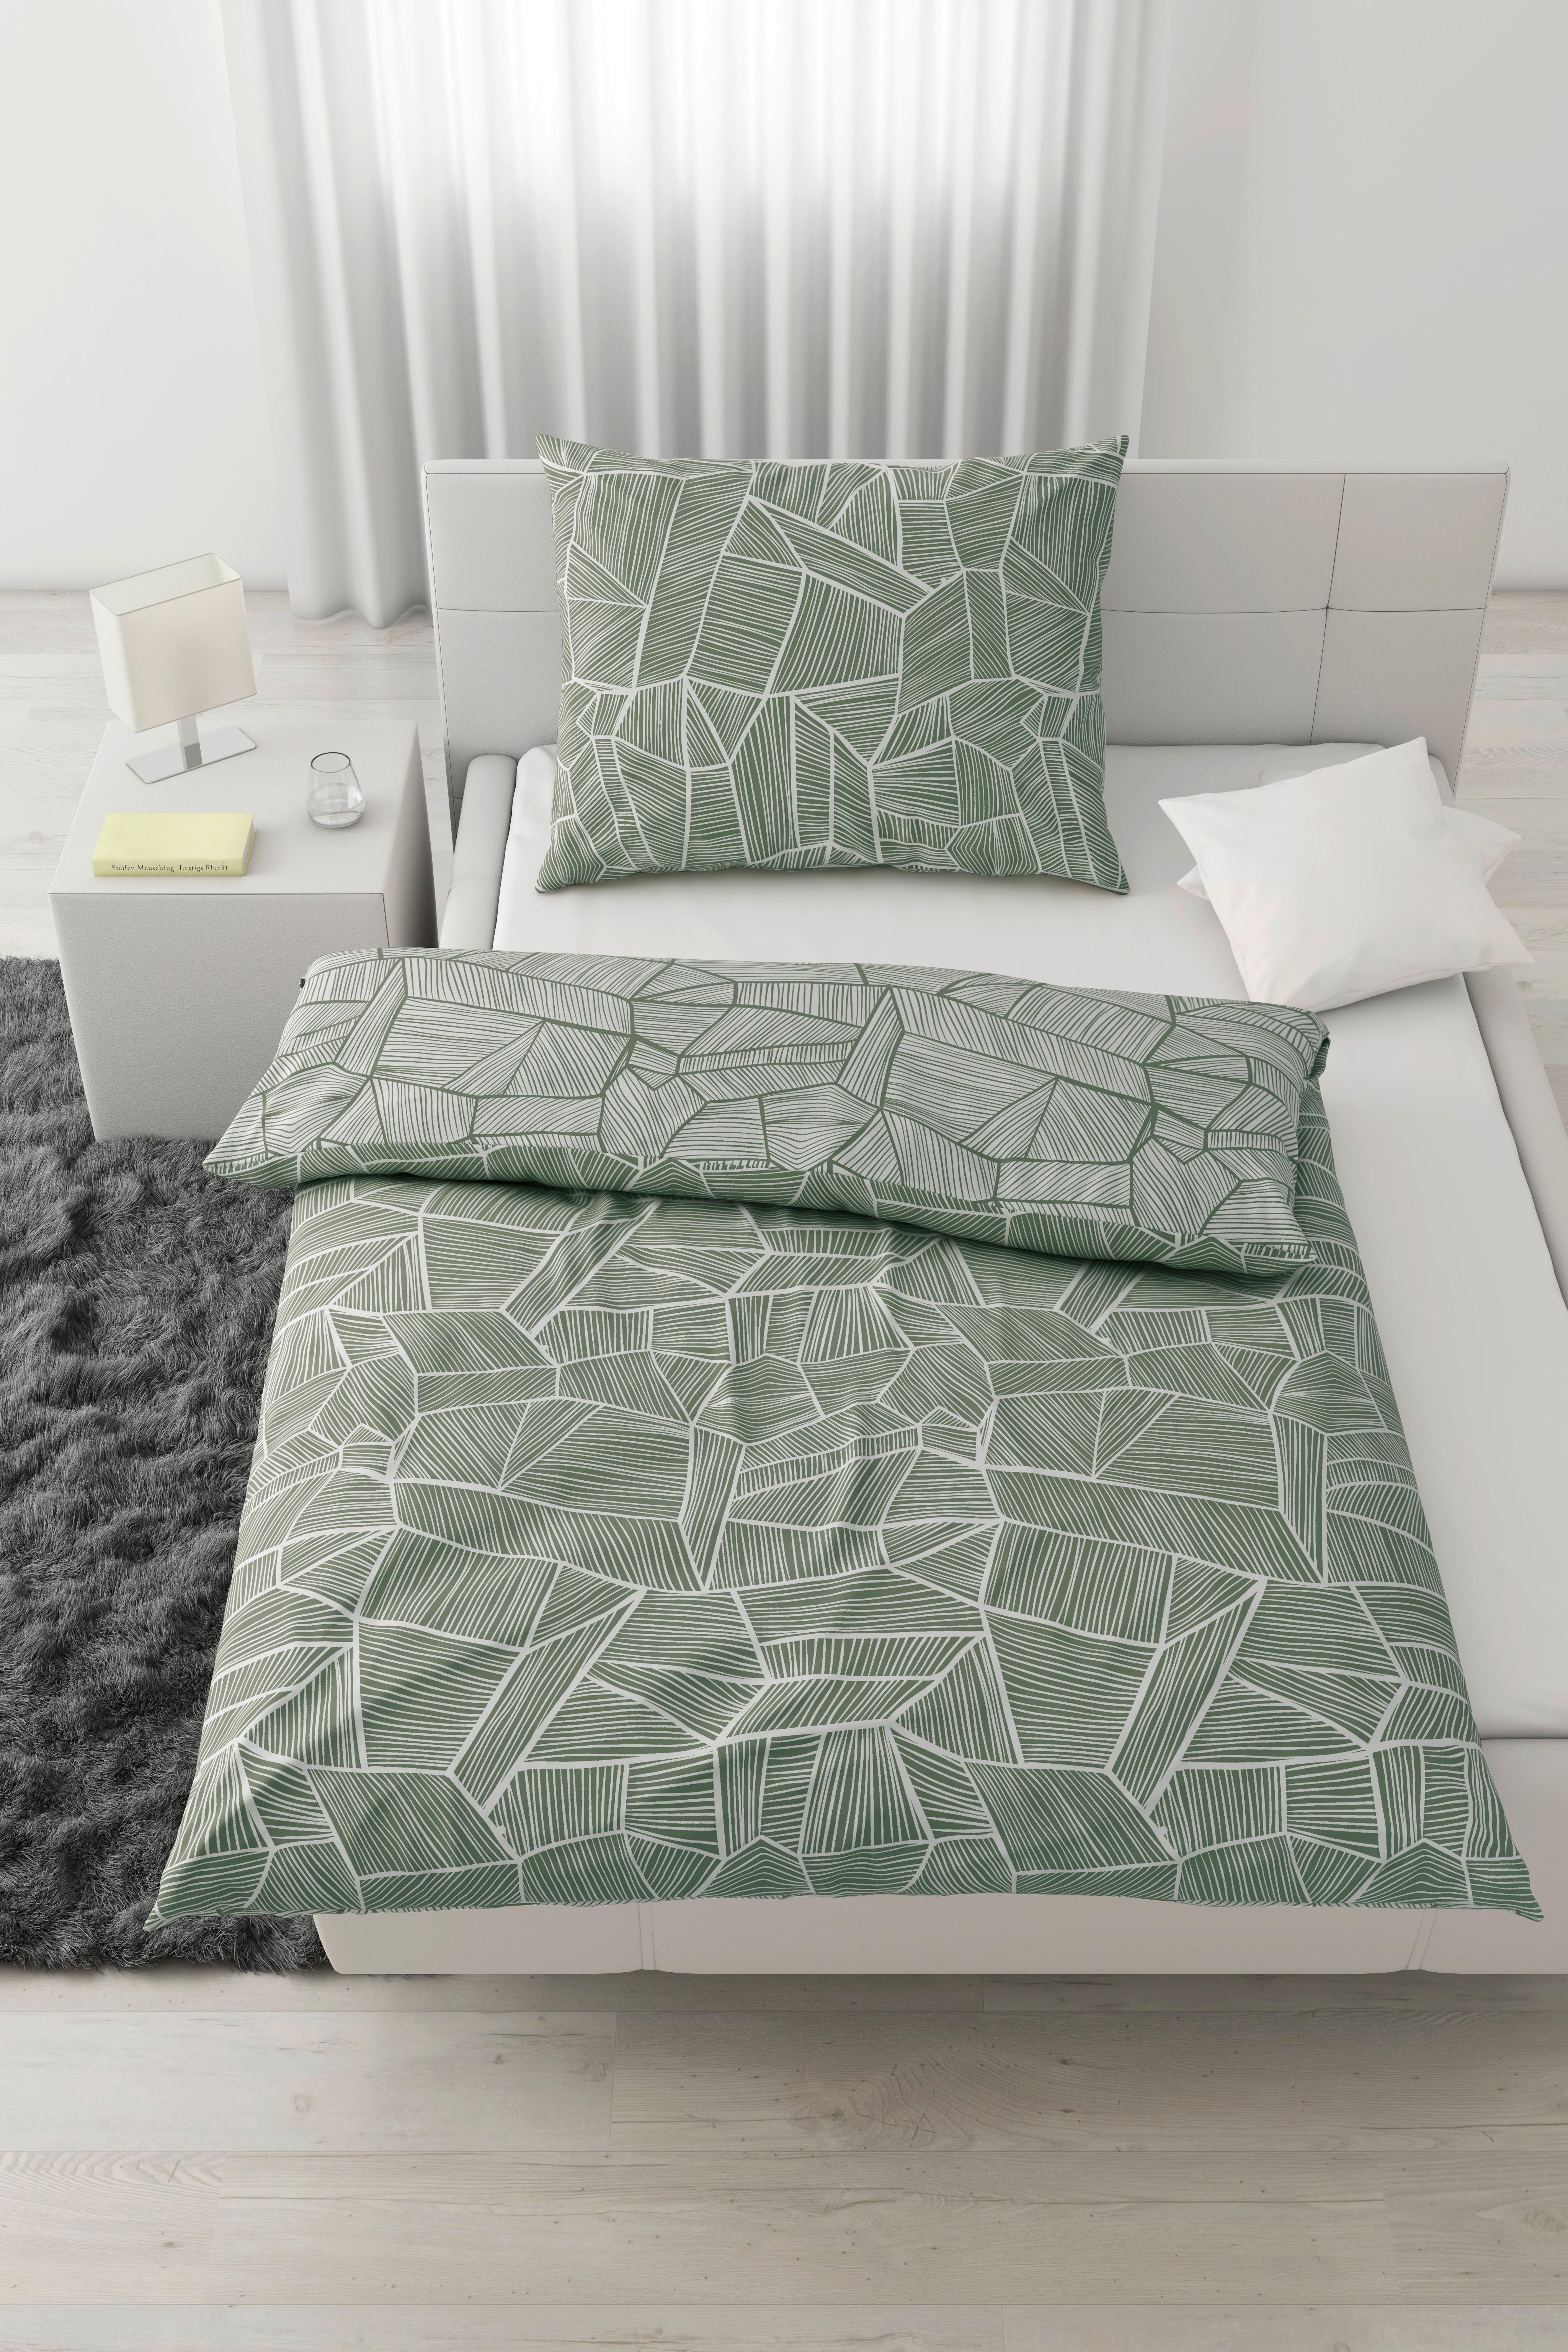 Lenjerie de pat Tessa Wende - alb/măsliniu, Konventionell, textil (140/200cm) - Modern Living